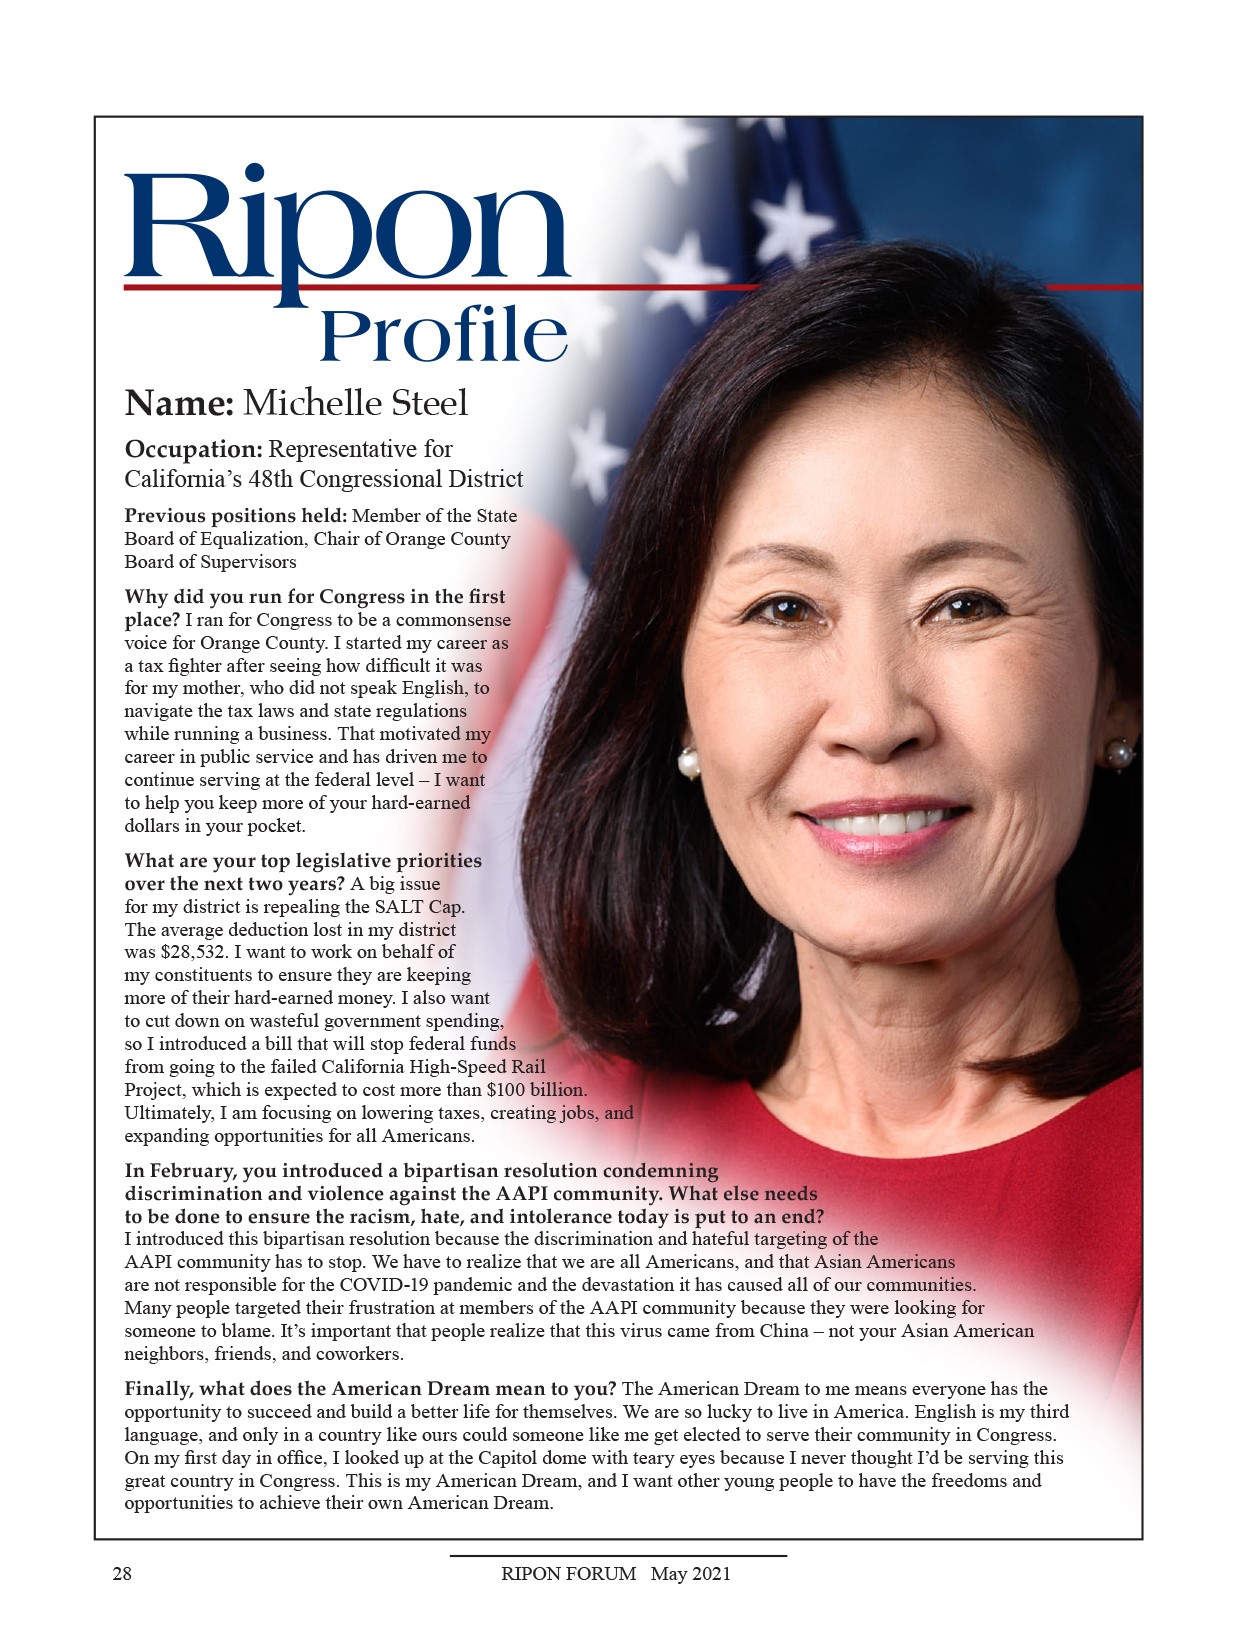 Ripon Profile of Michelle Steel